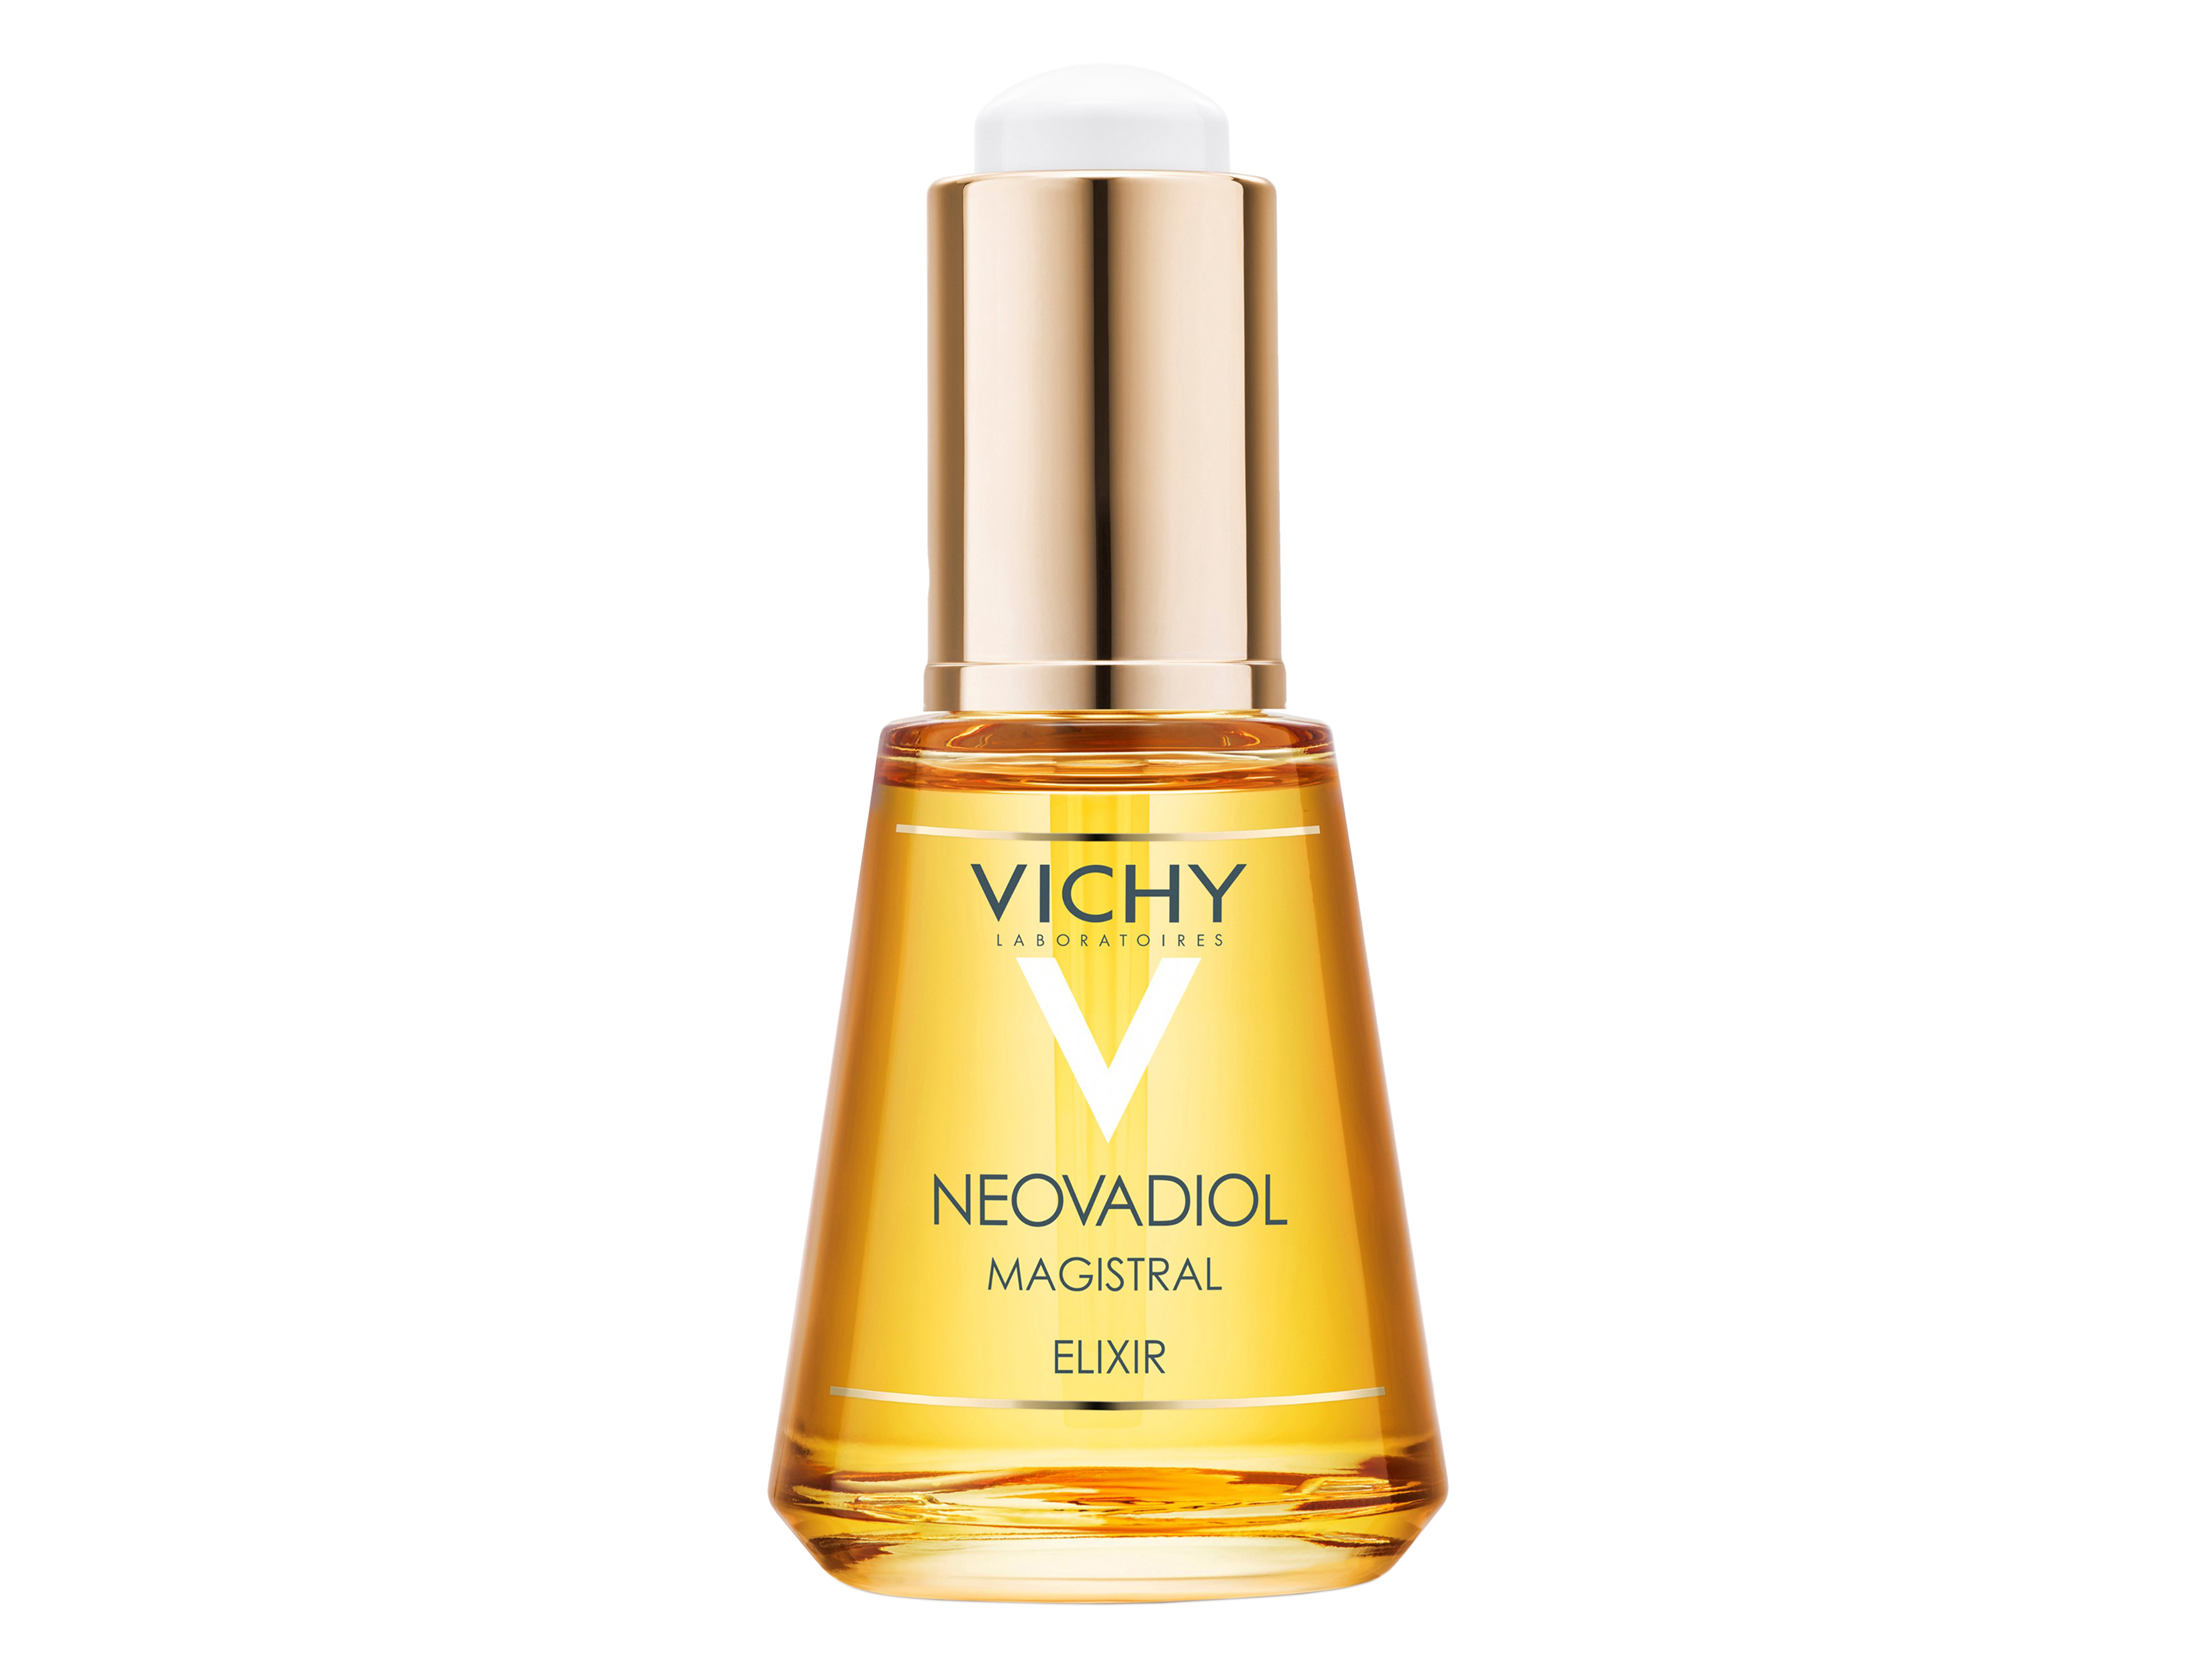 Vichy Neovadiol Magistral Elixir, 30 ml